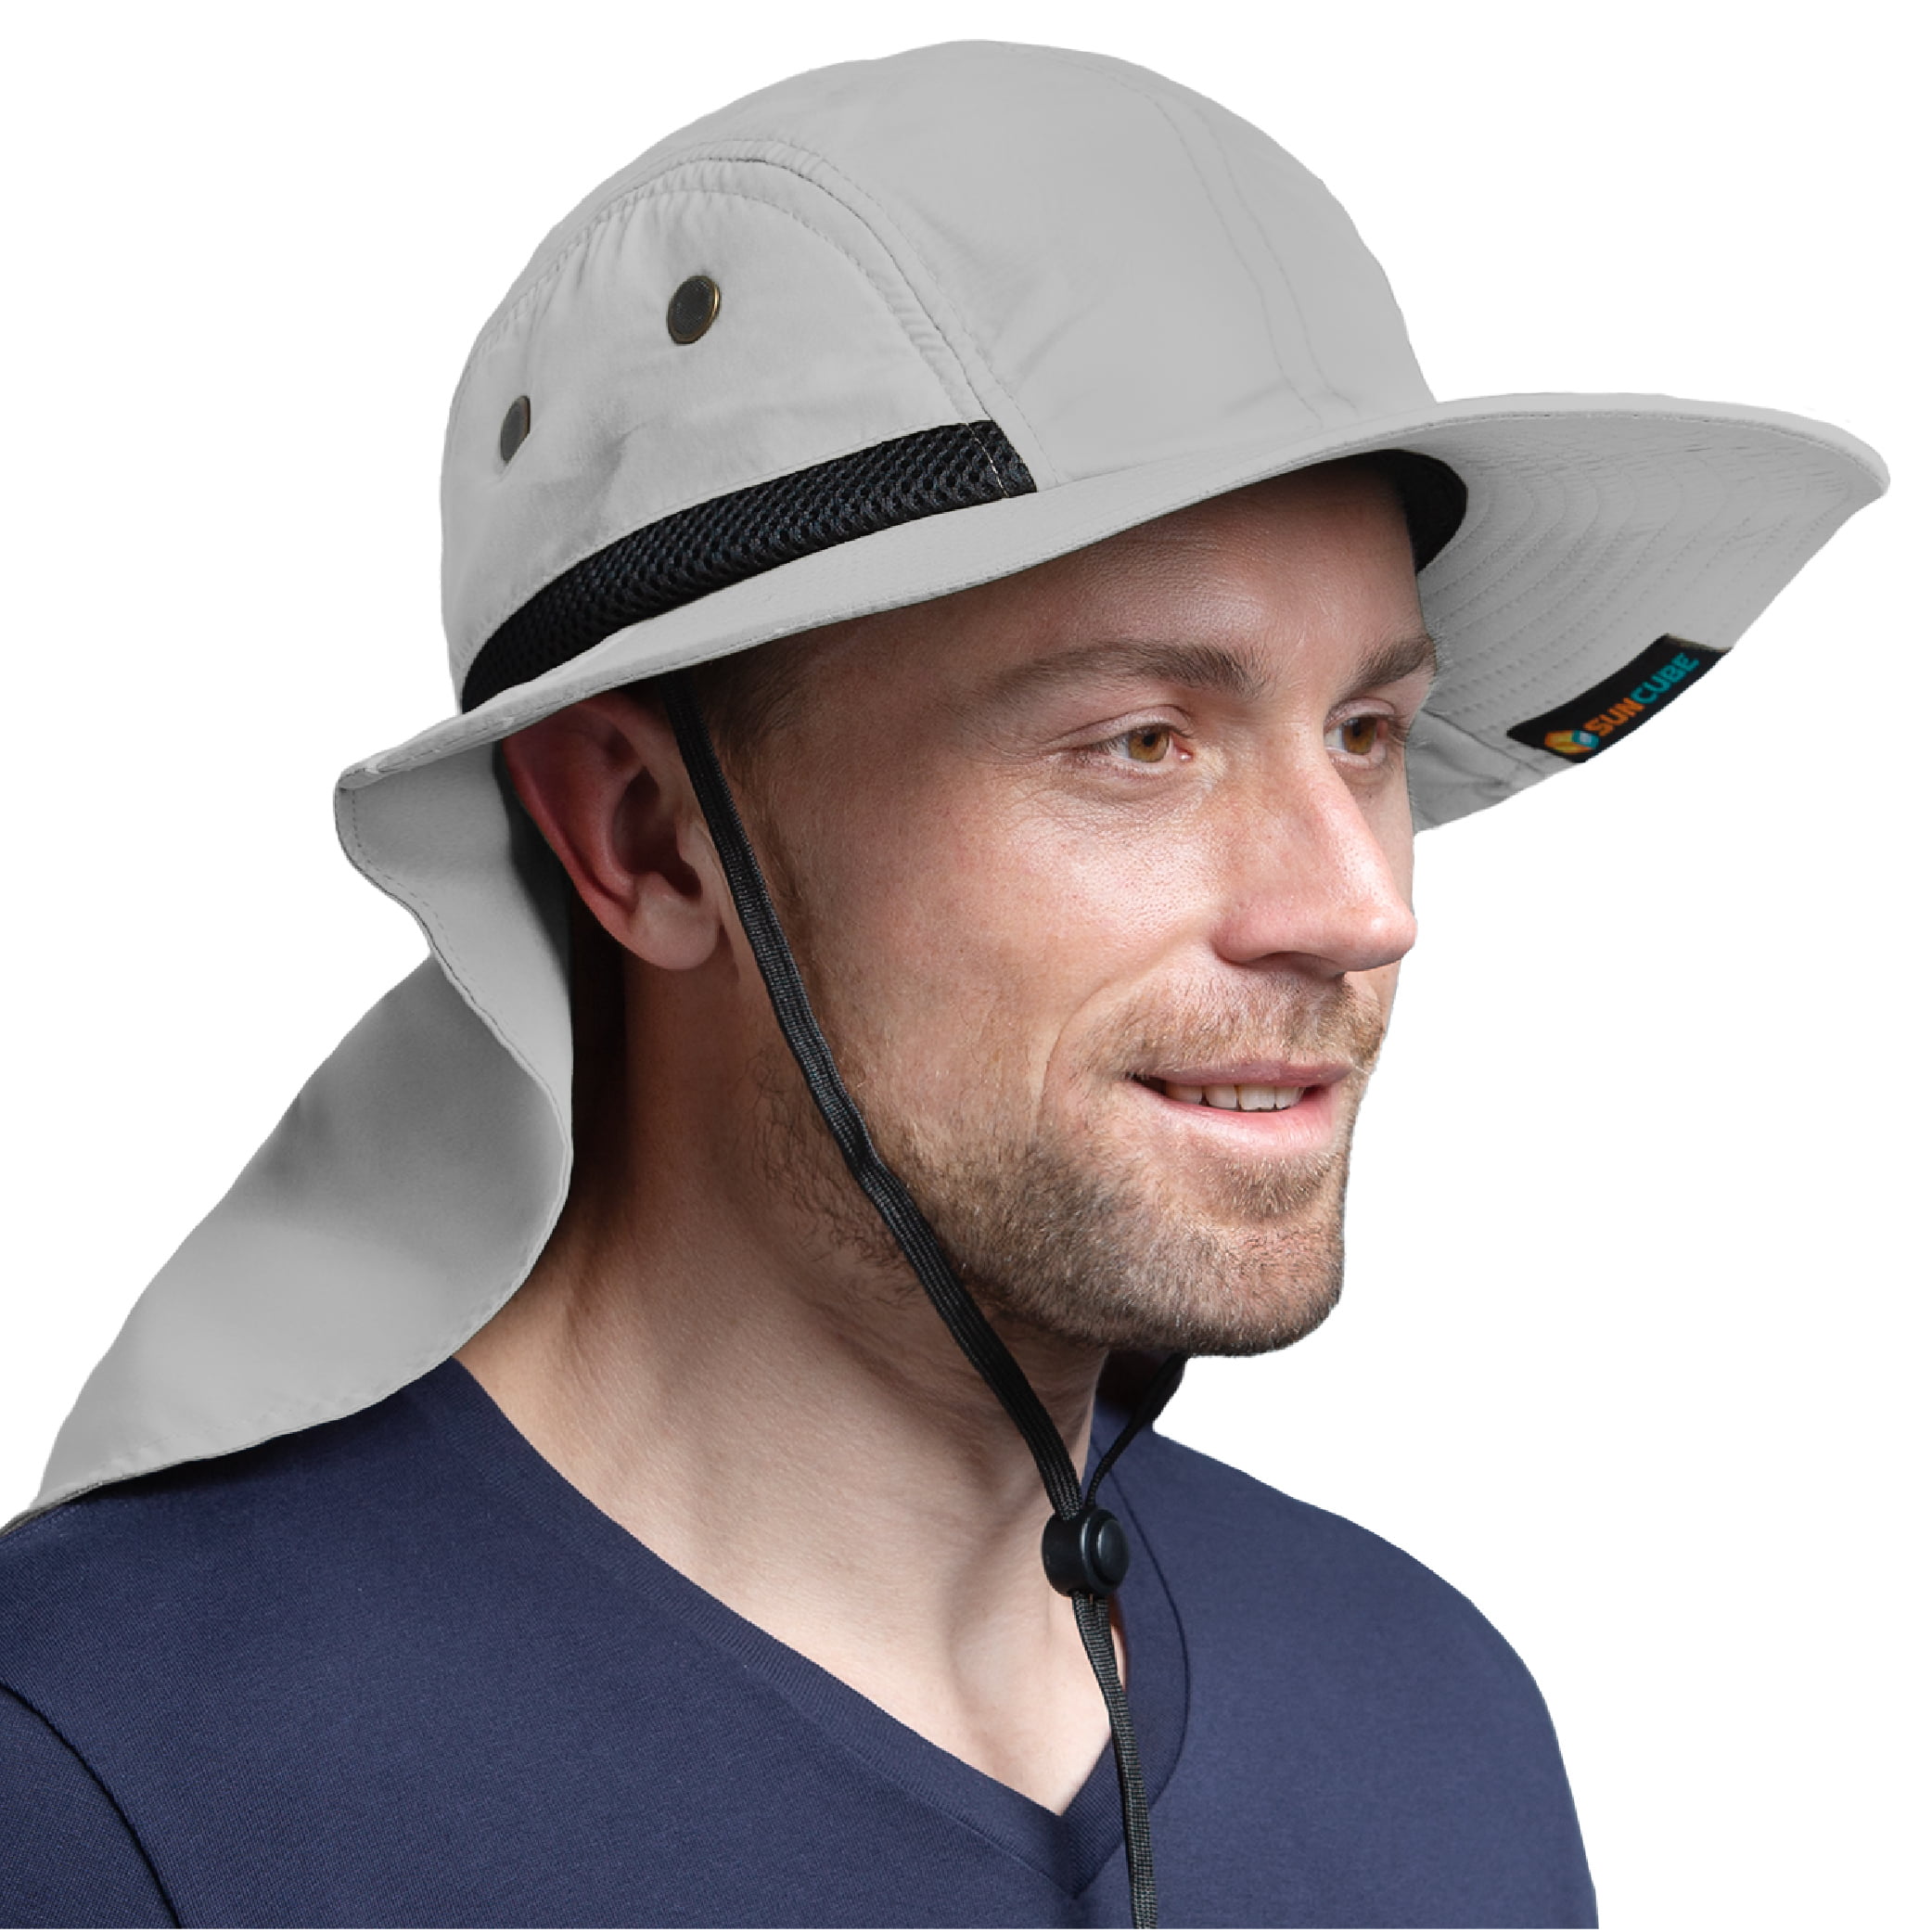 Hhhc Fishing Hat With Neck Flap, Sun Protection Hiking Hat For Men Women Safari Cap, Sun Hat Gardening Beach, Gray